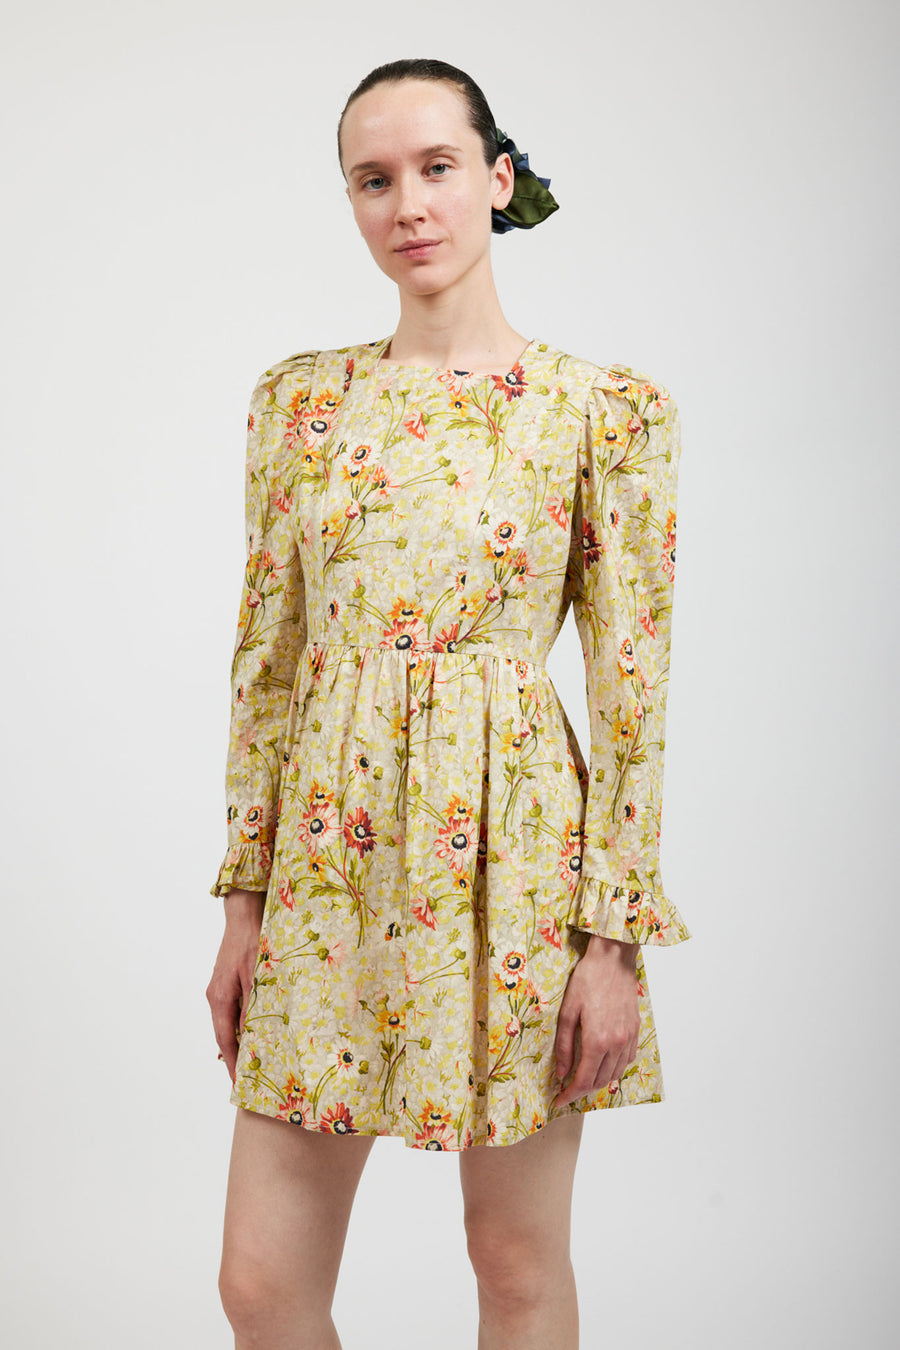 BATSHEVA - Laura Ashley x BATSHEVA Square Neck Mini Prairie Dress in Witton Floral